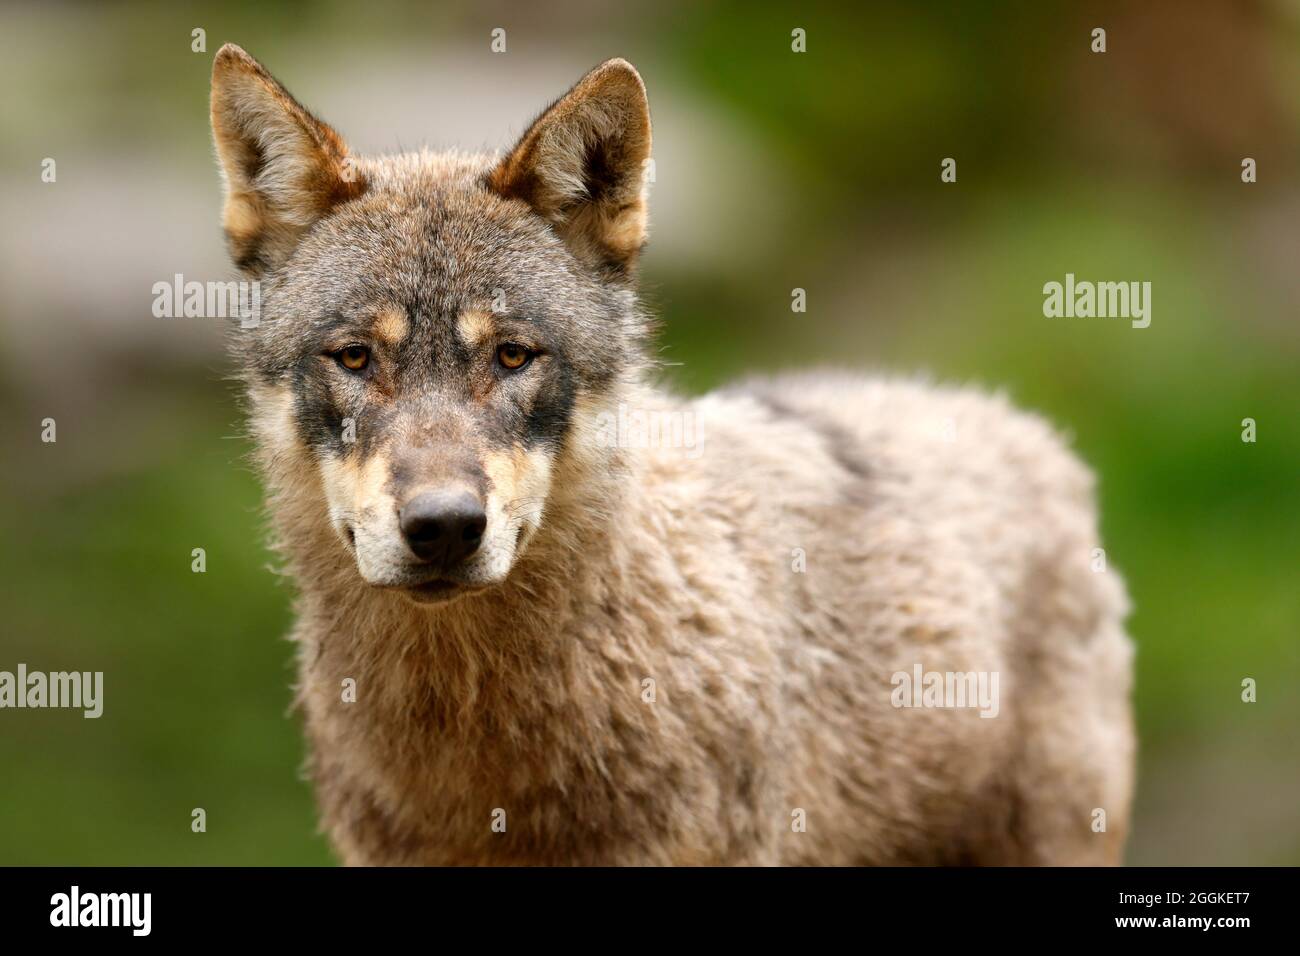 European wolf (Canis lupus) animal portrait, Germany Stock Photo